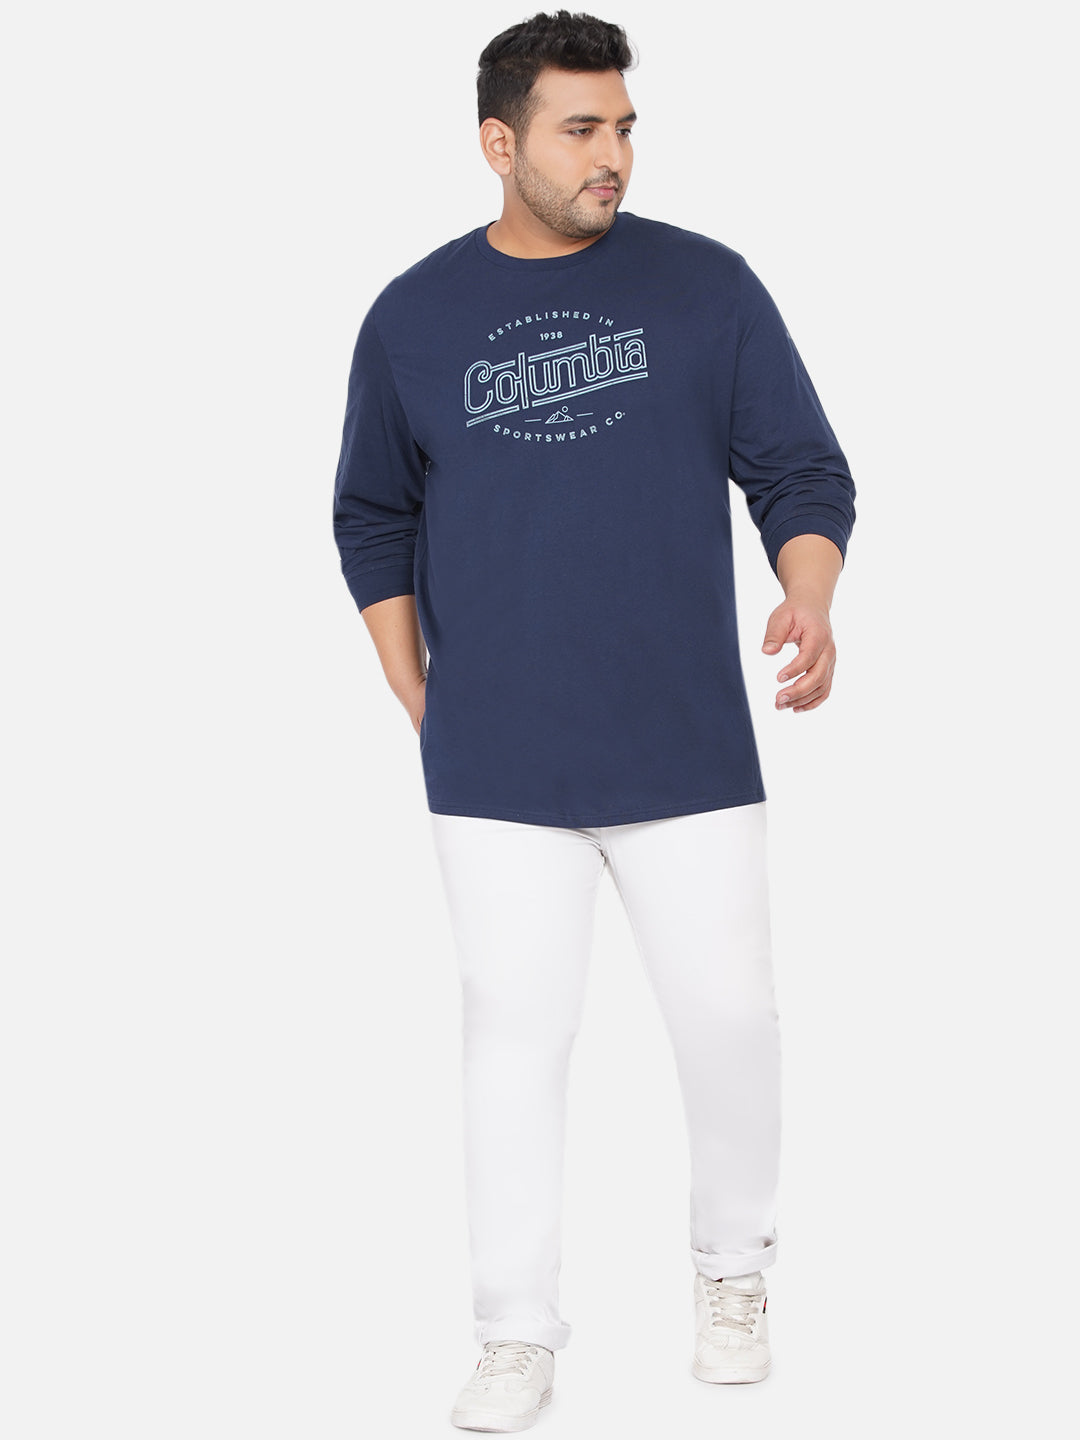 Columbia - Men Navy Blue Plus Size Regular Fit Full Sleeve Cotton T-Shirts 4XL